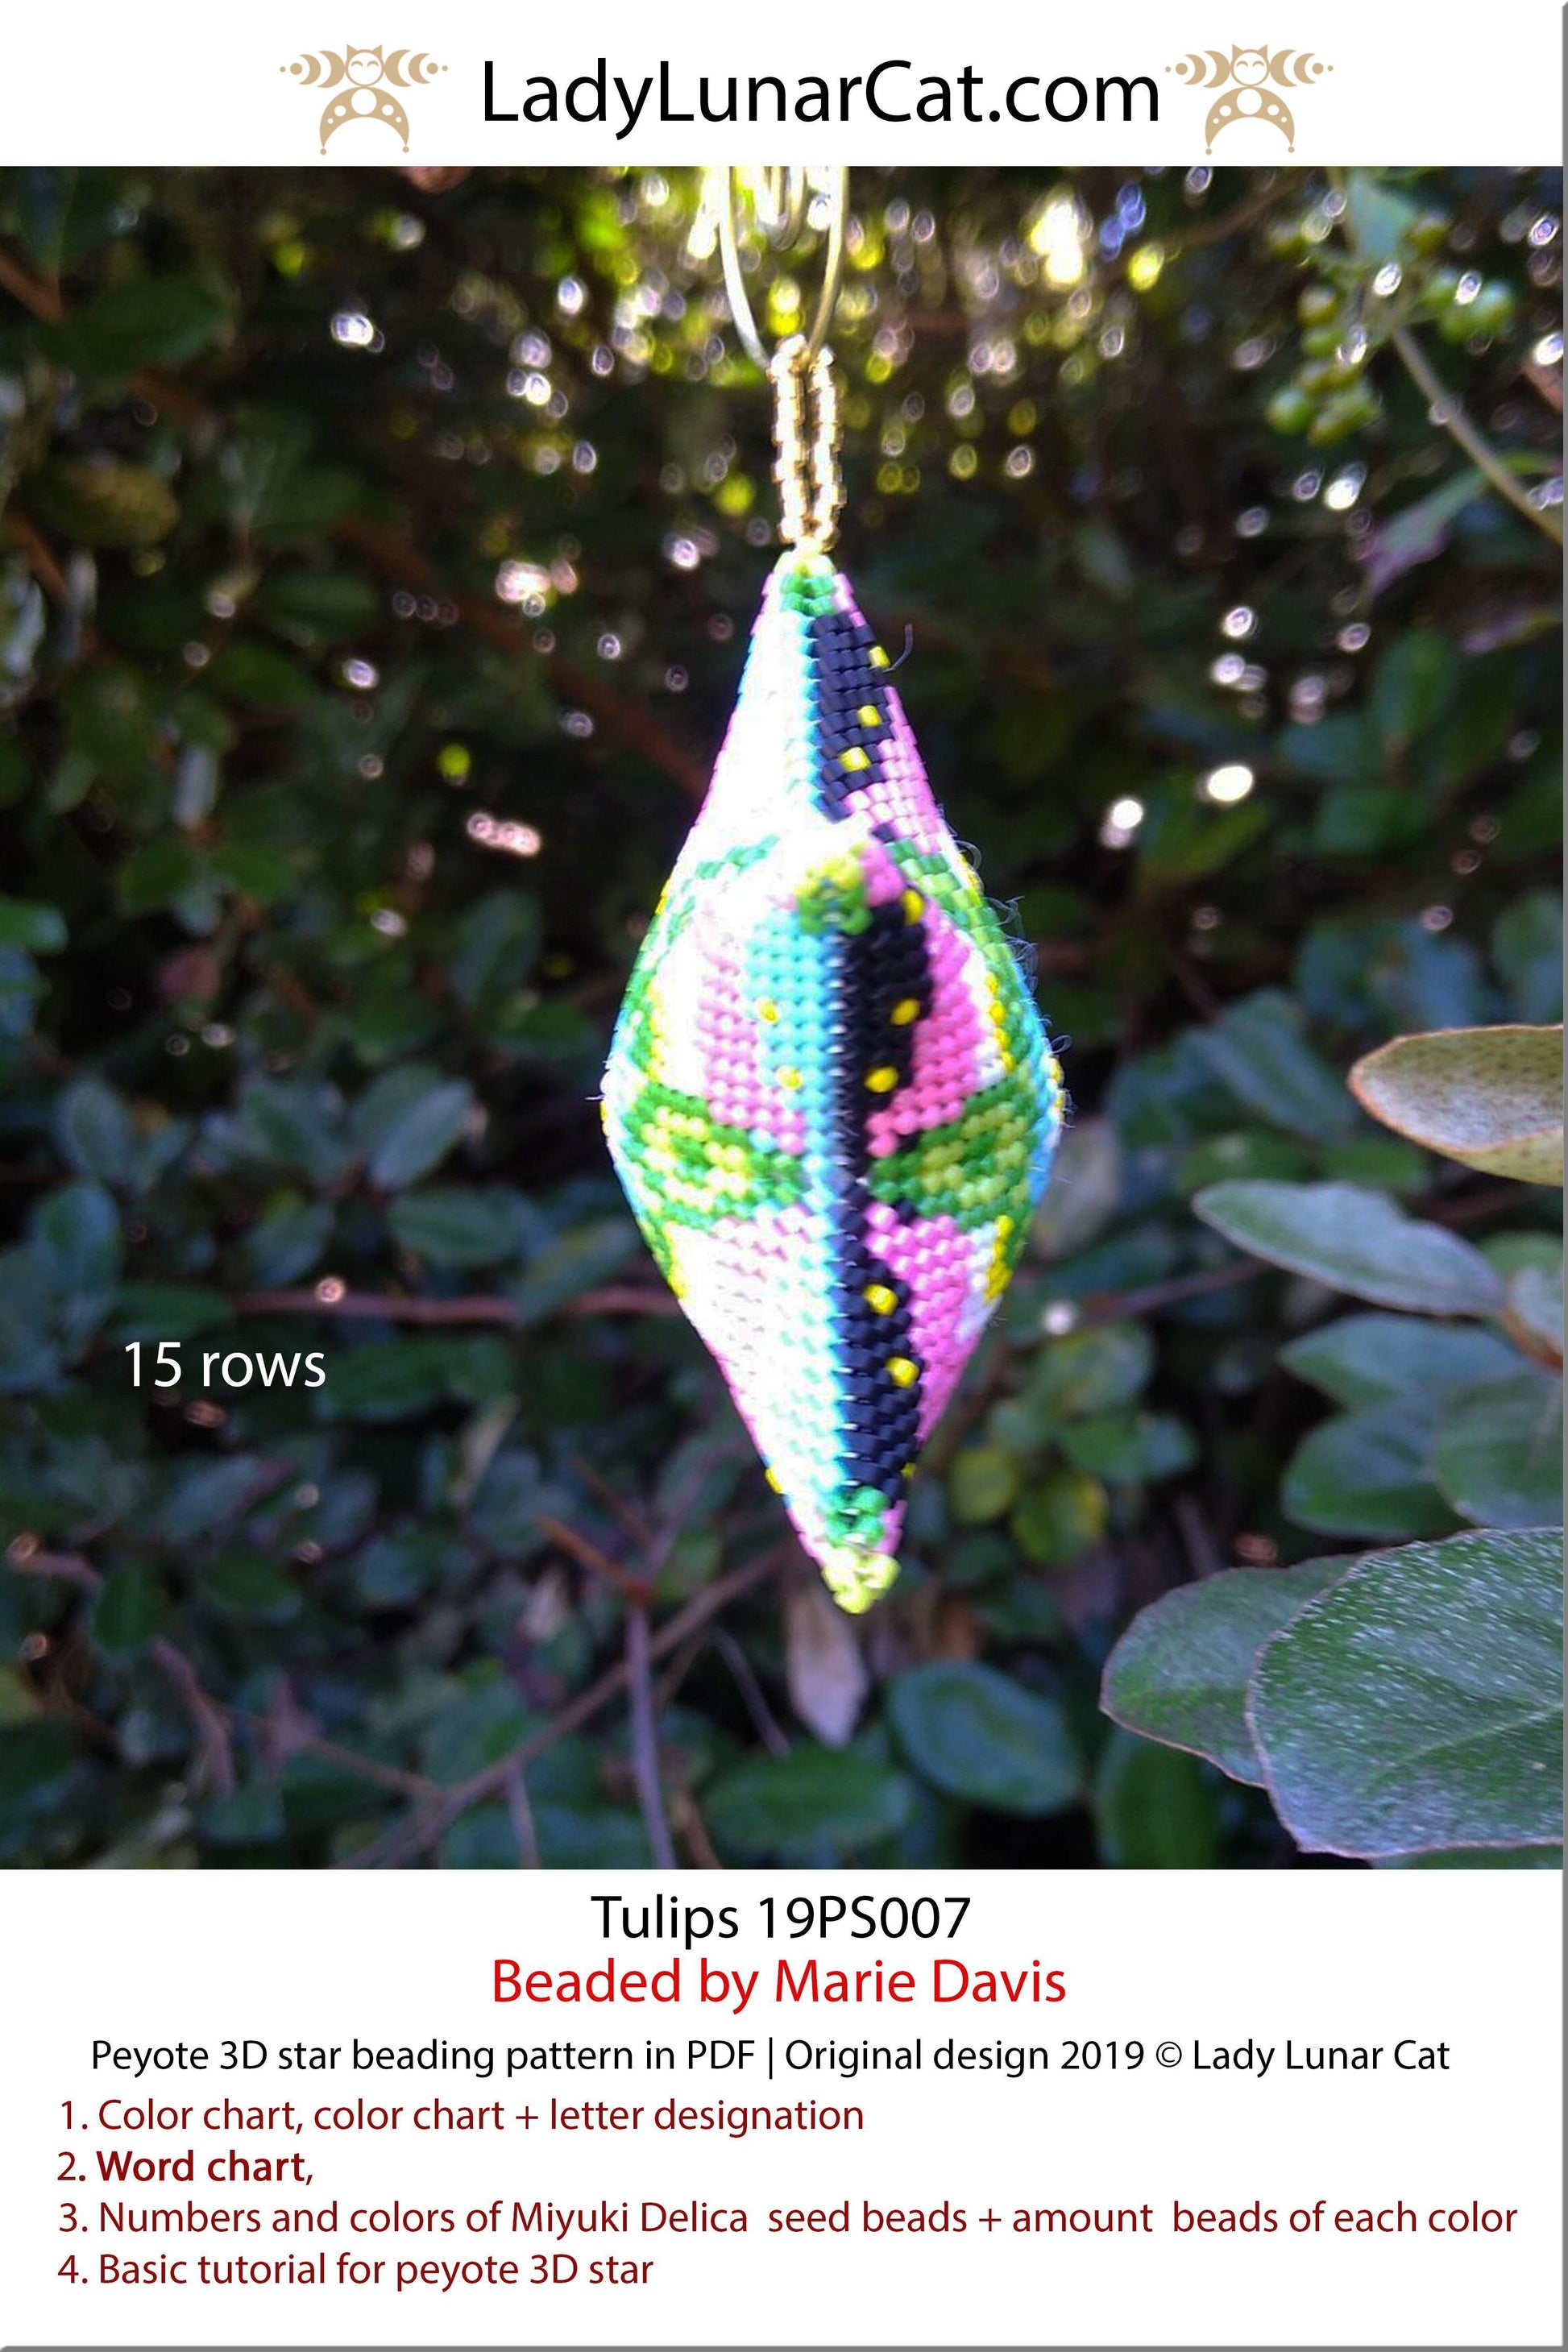 Beaded star pattern - Tulips 19PS007 | Seed beads tutorial for 3D peyote star LadyLunarCat